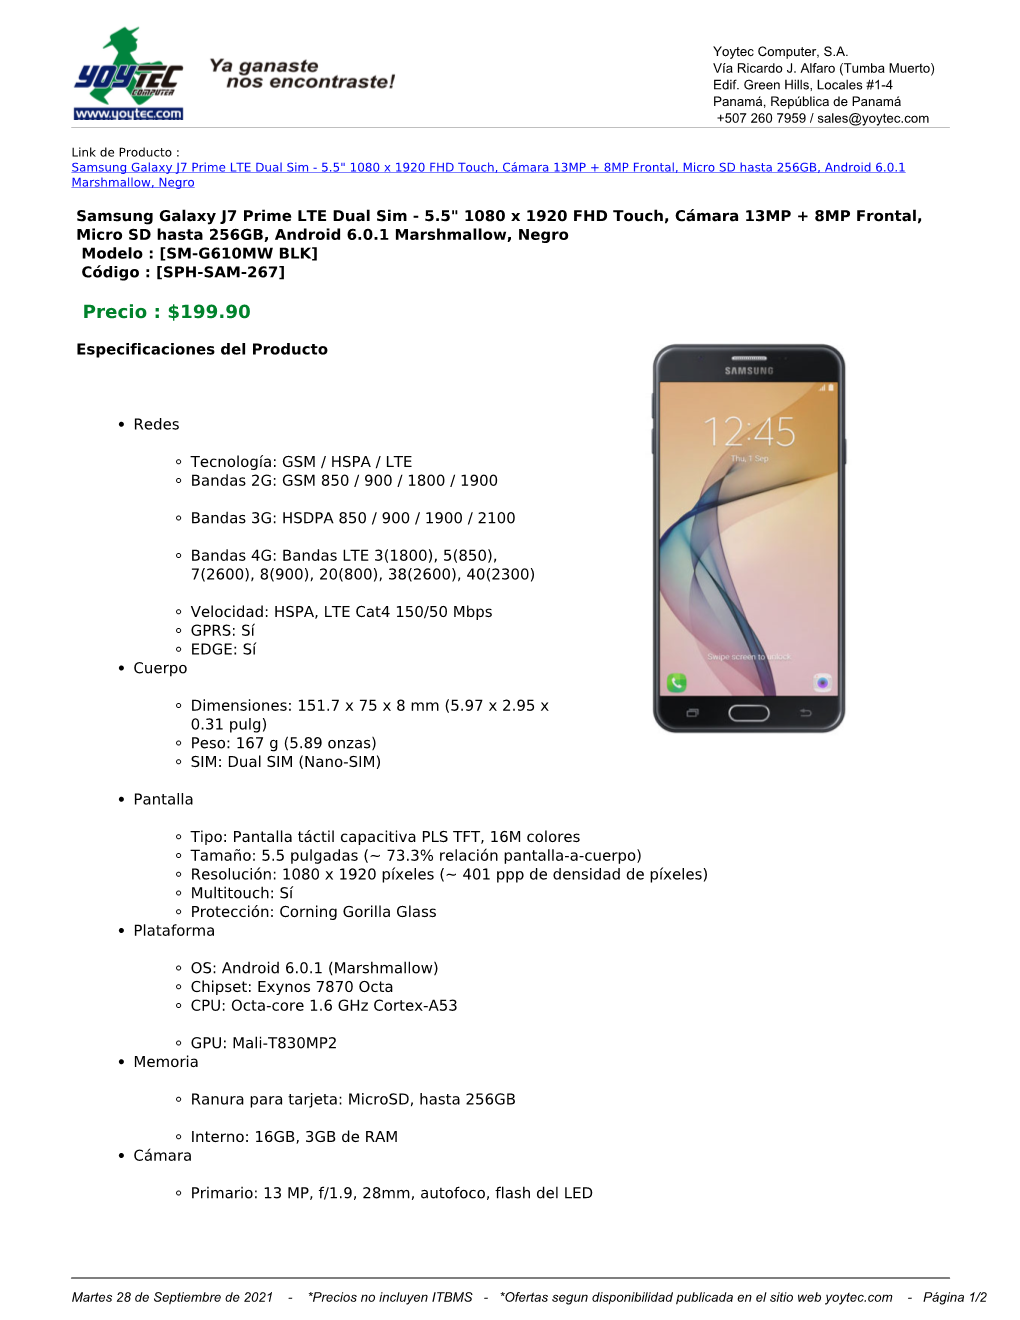 Samsung Galaxy J7 Prime LTE Dual Sim - 5.5" 1080 X 1920 FHD Touch, Cámara 13MP + 8MP Frontal, Micro SD Hasta 256GB, Android 6.0.1 Marshmallow, Negro